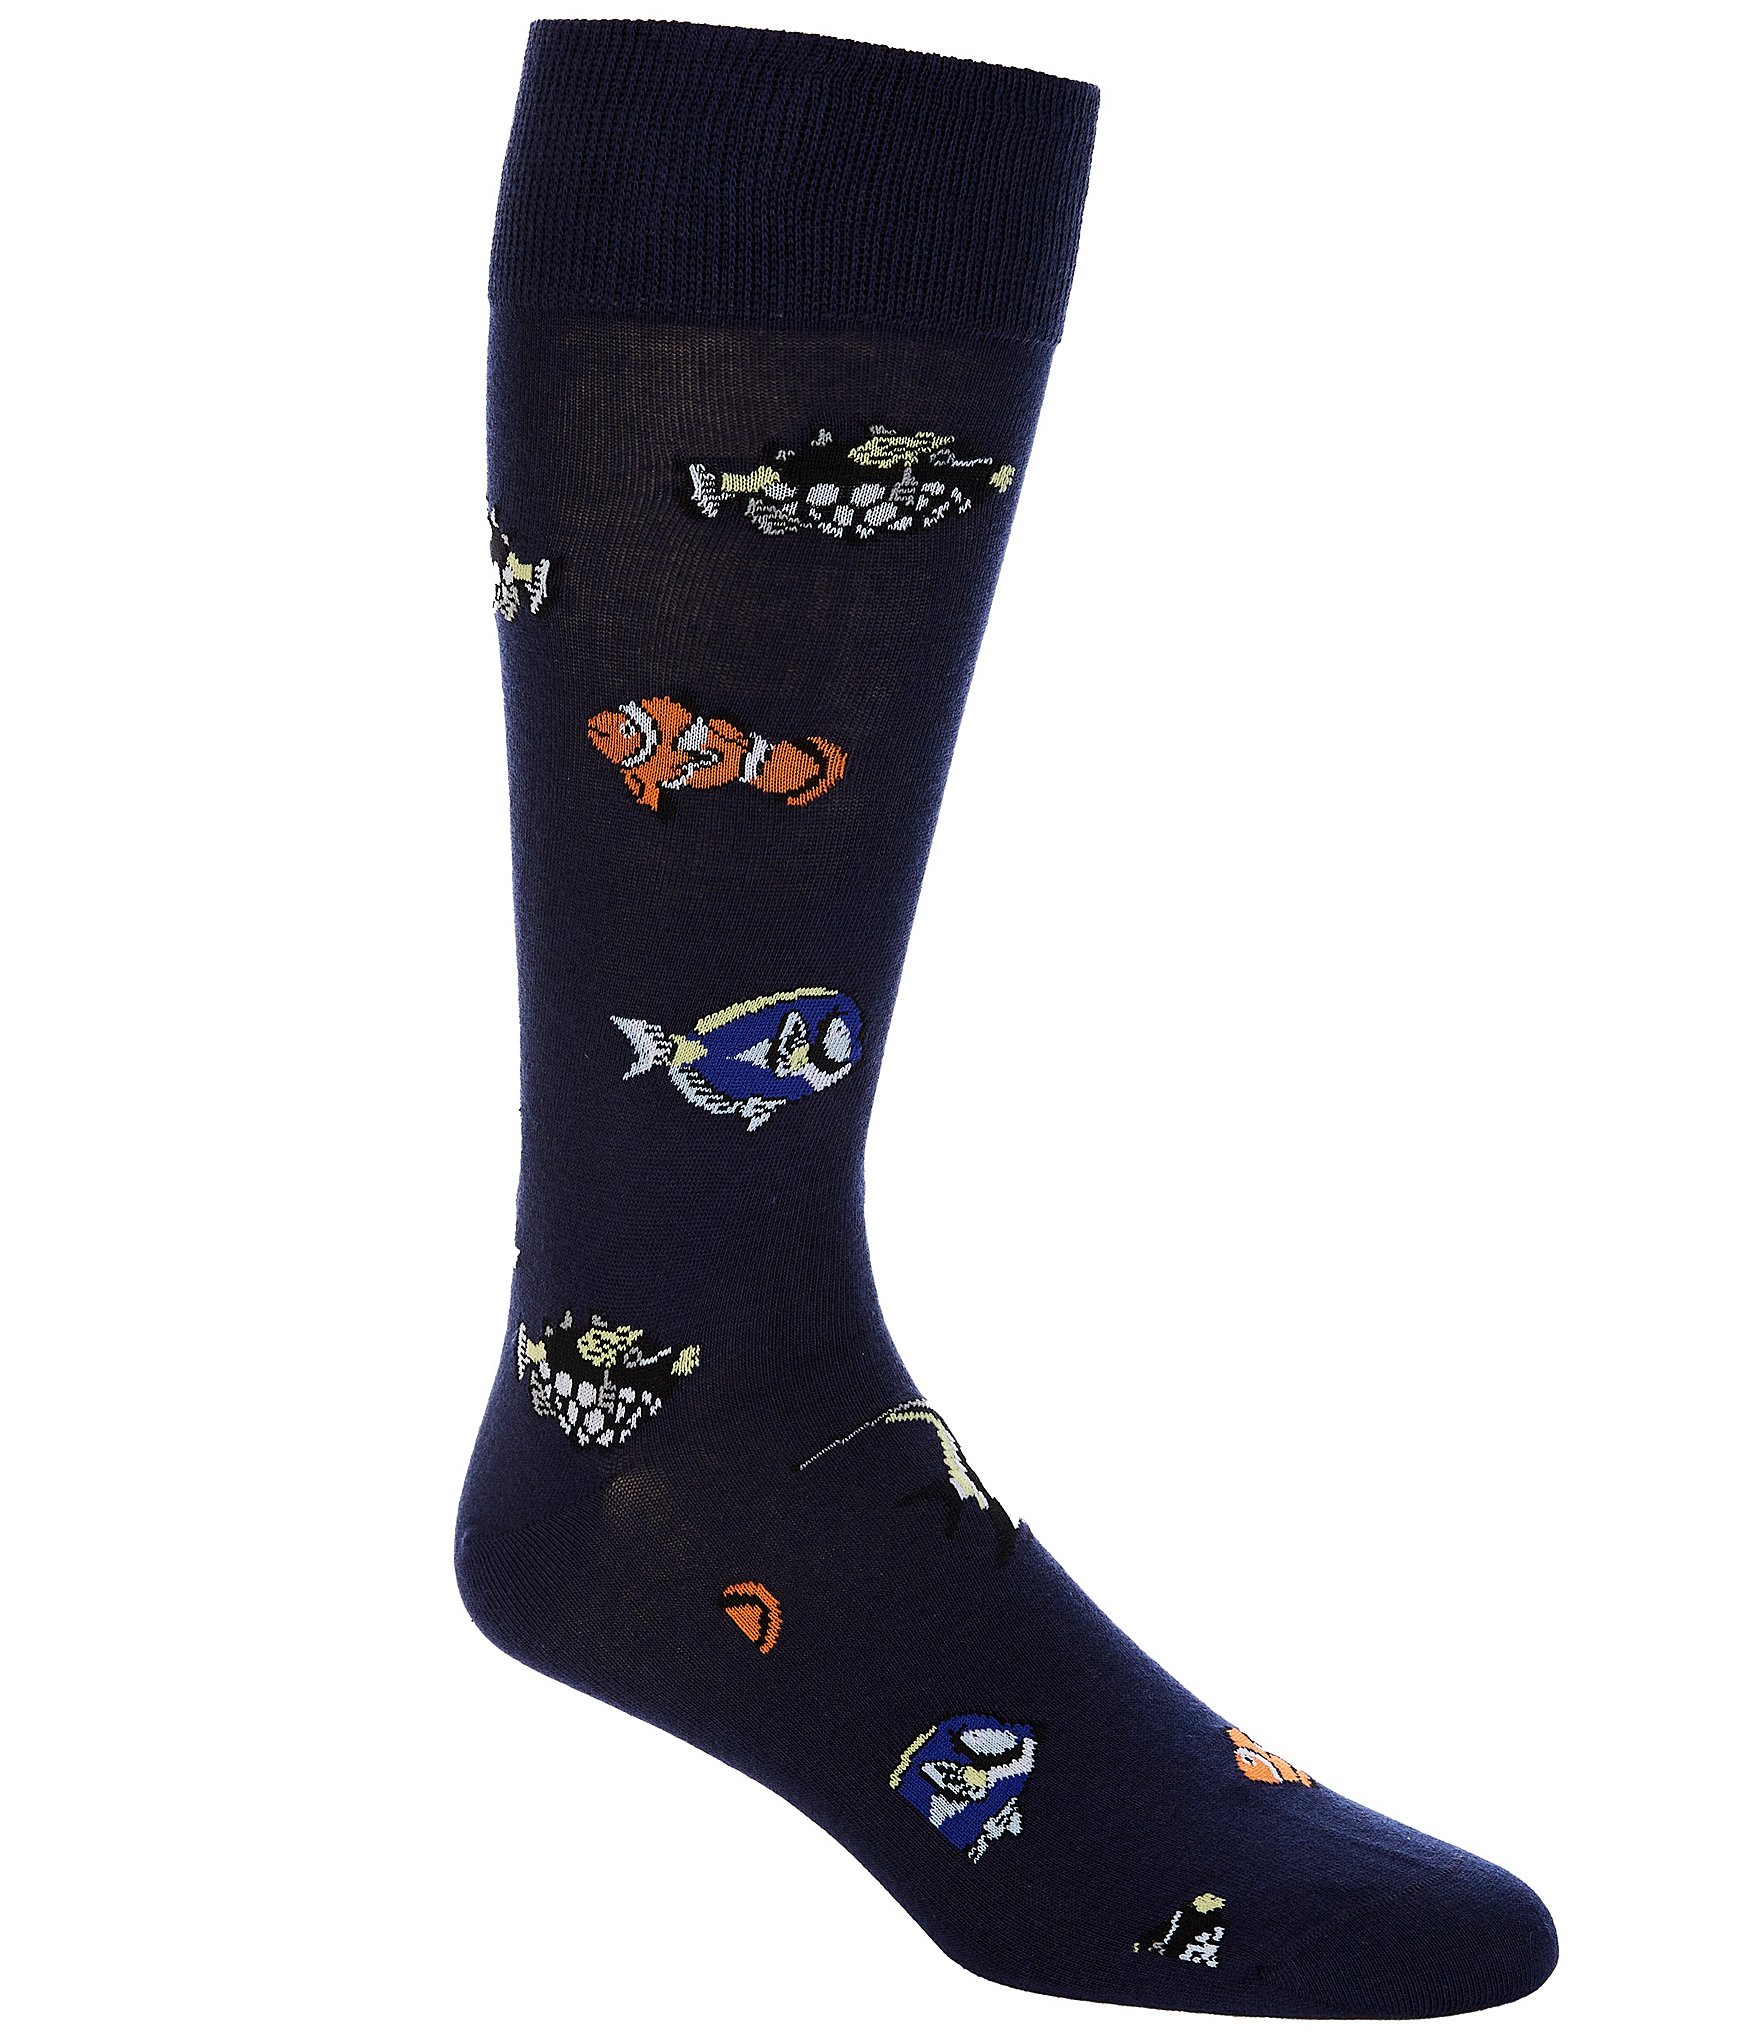 Tommy Bahama Reef Life Crew Dress Socks - One Size